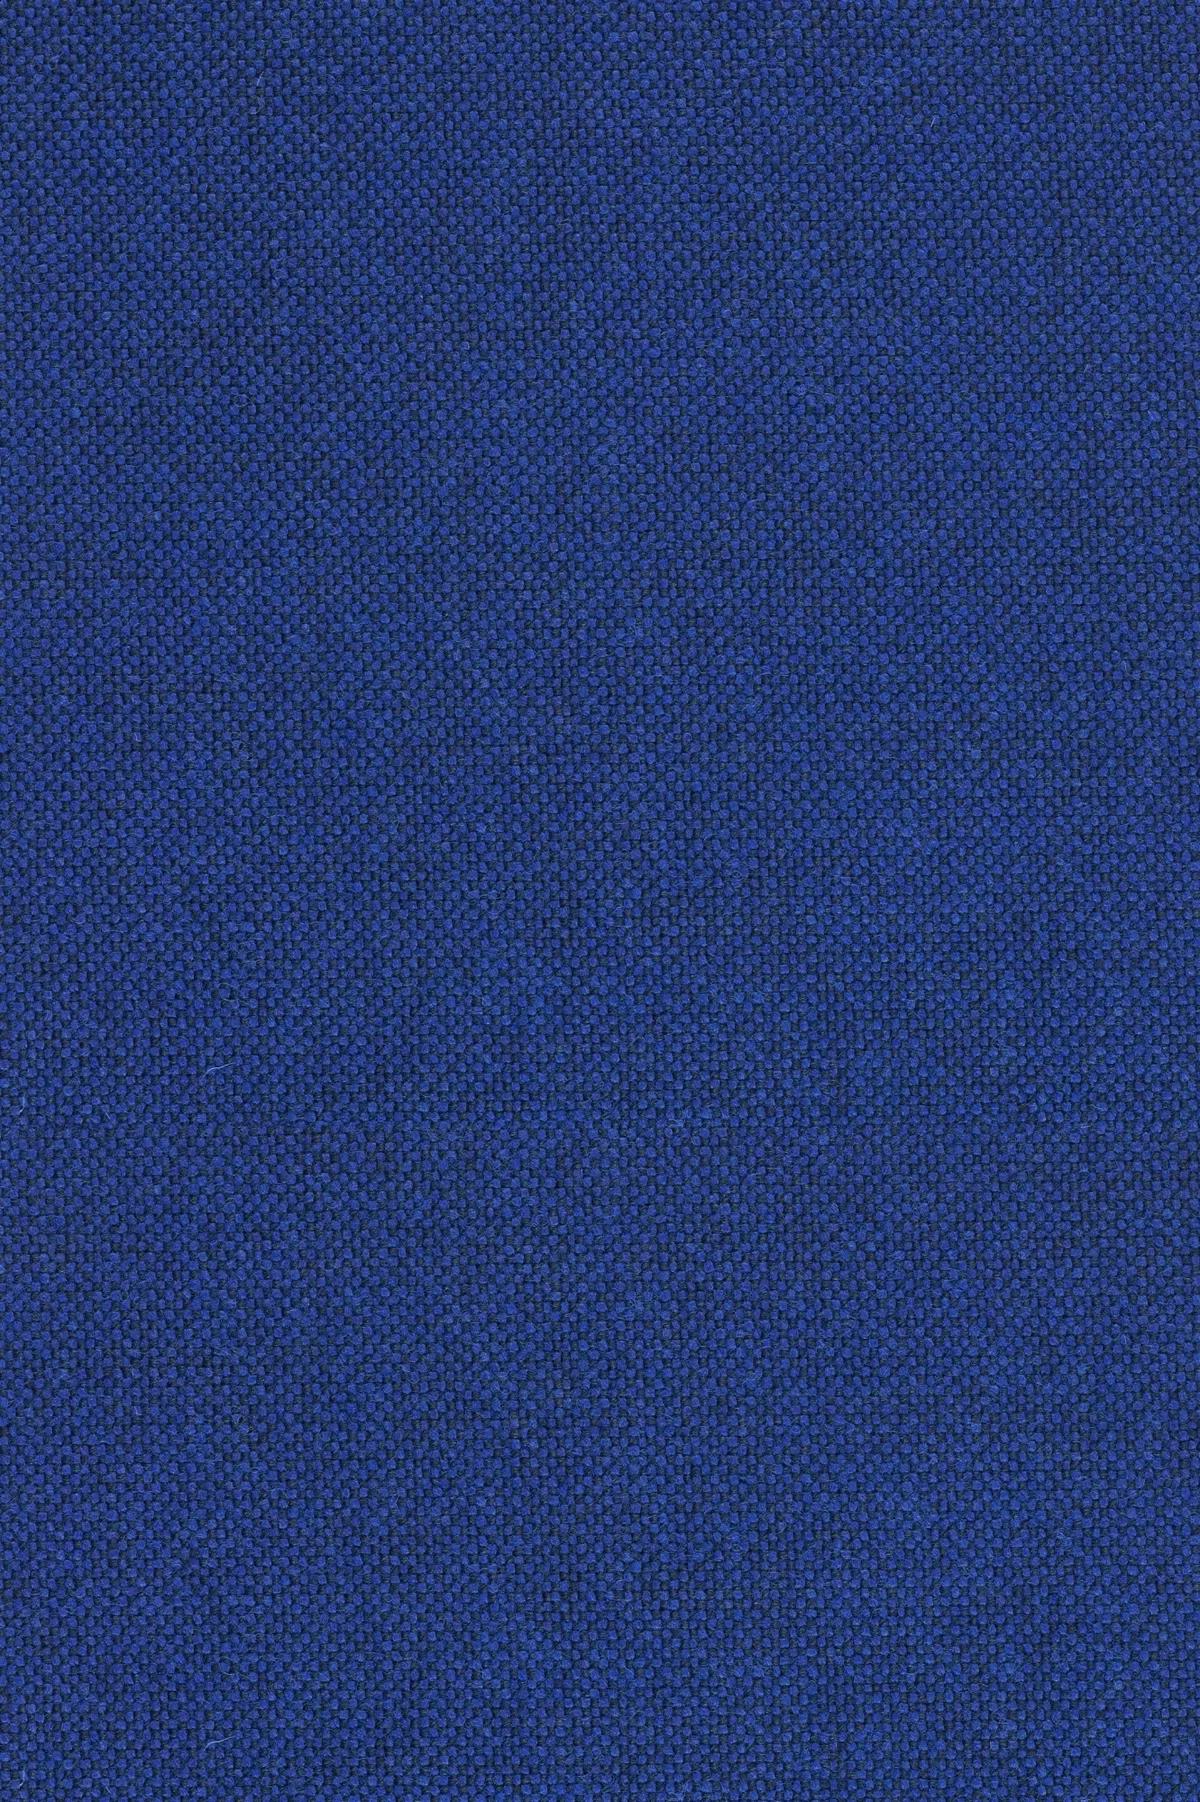 Fabric sample Hallingdal 65 754 blue